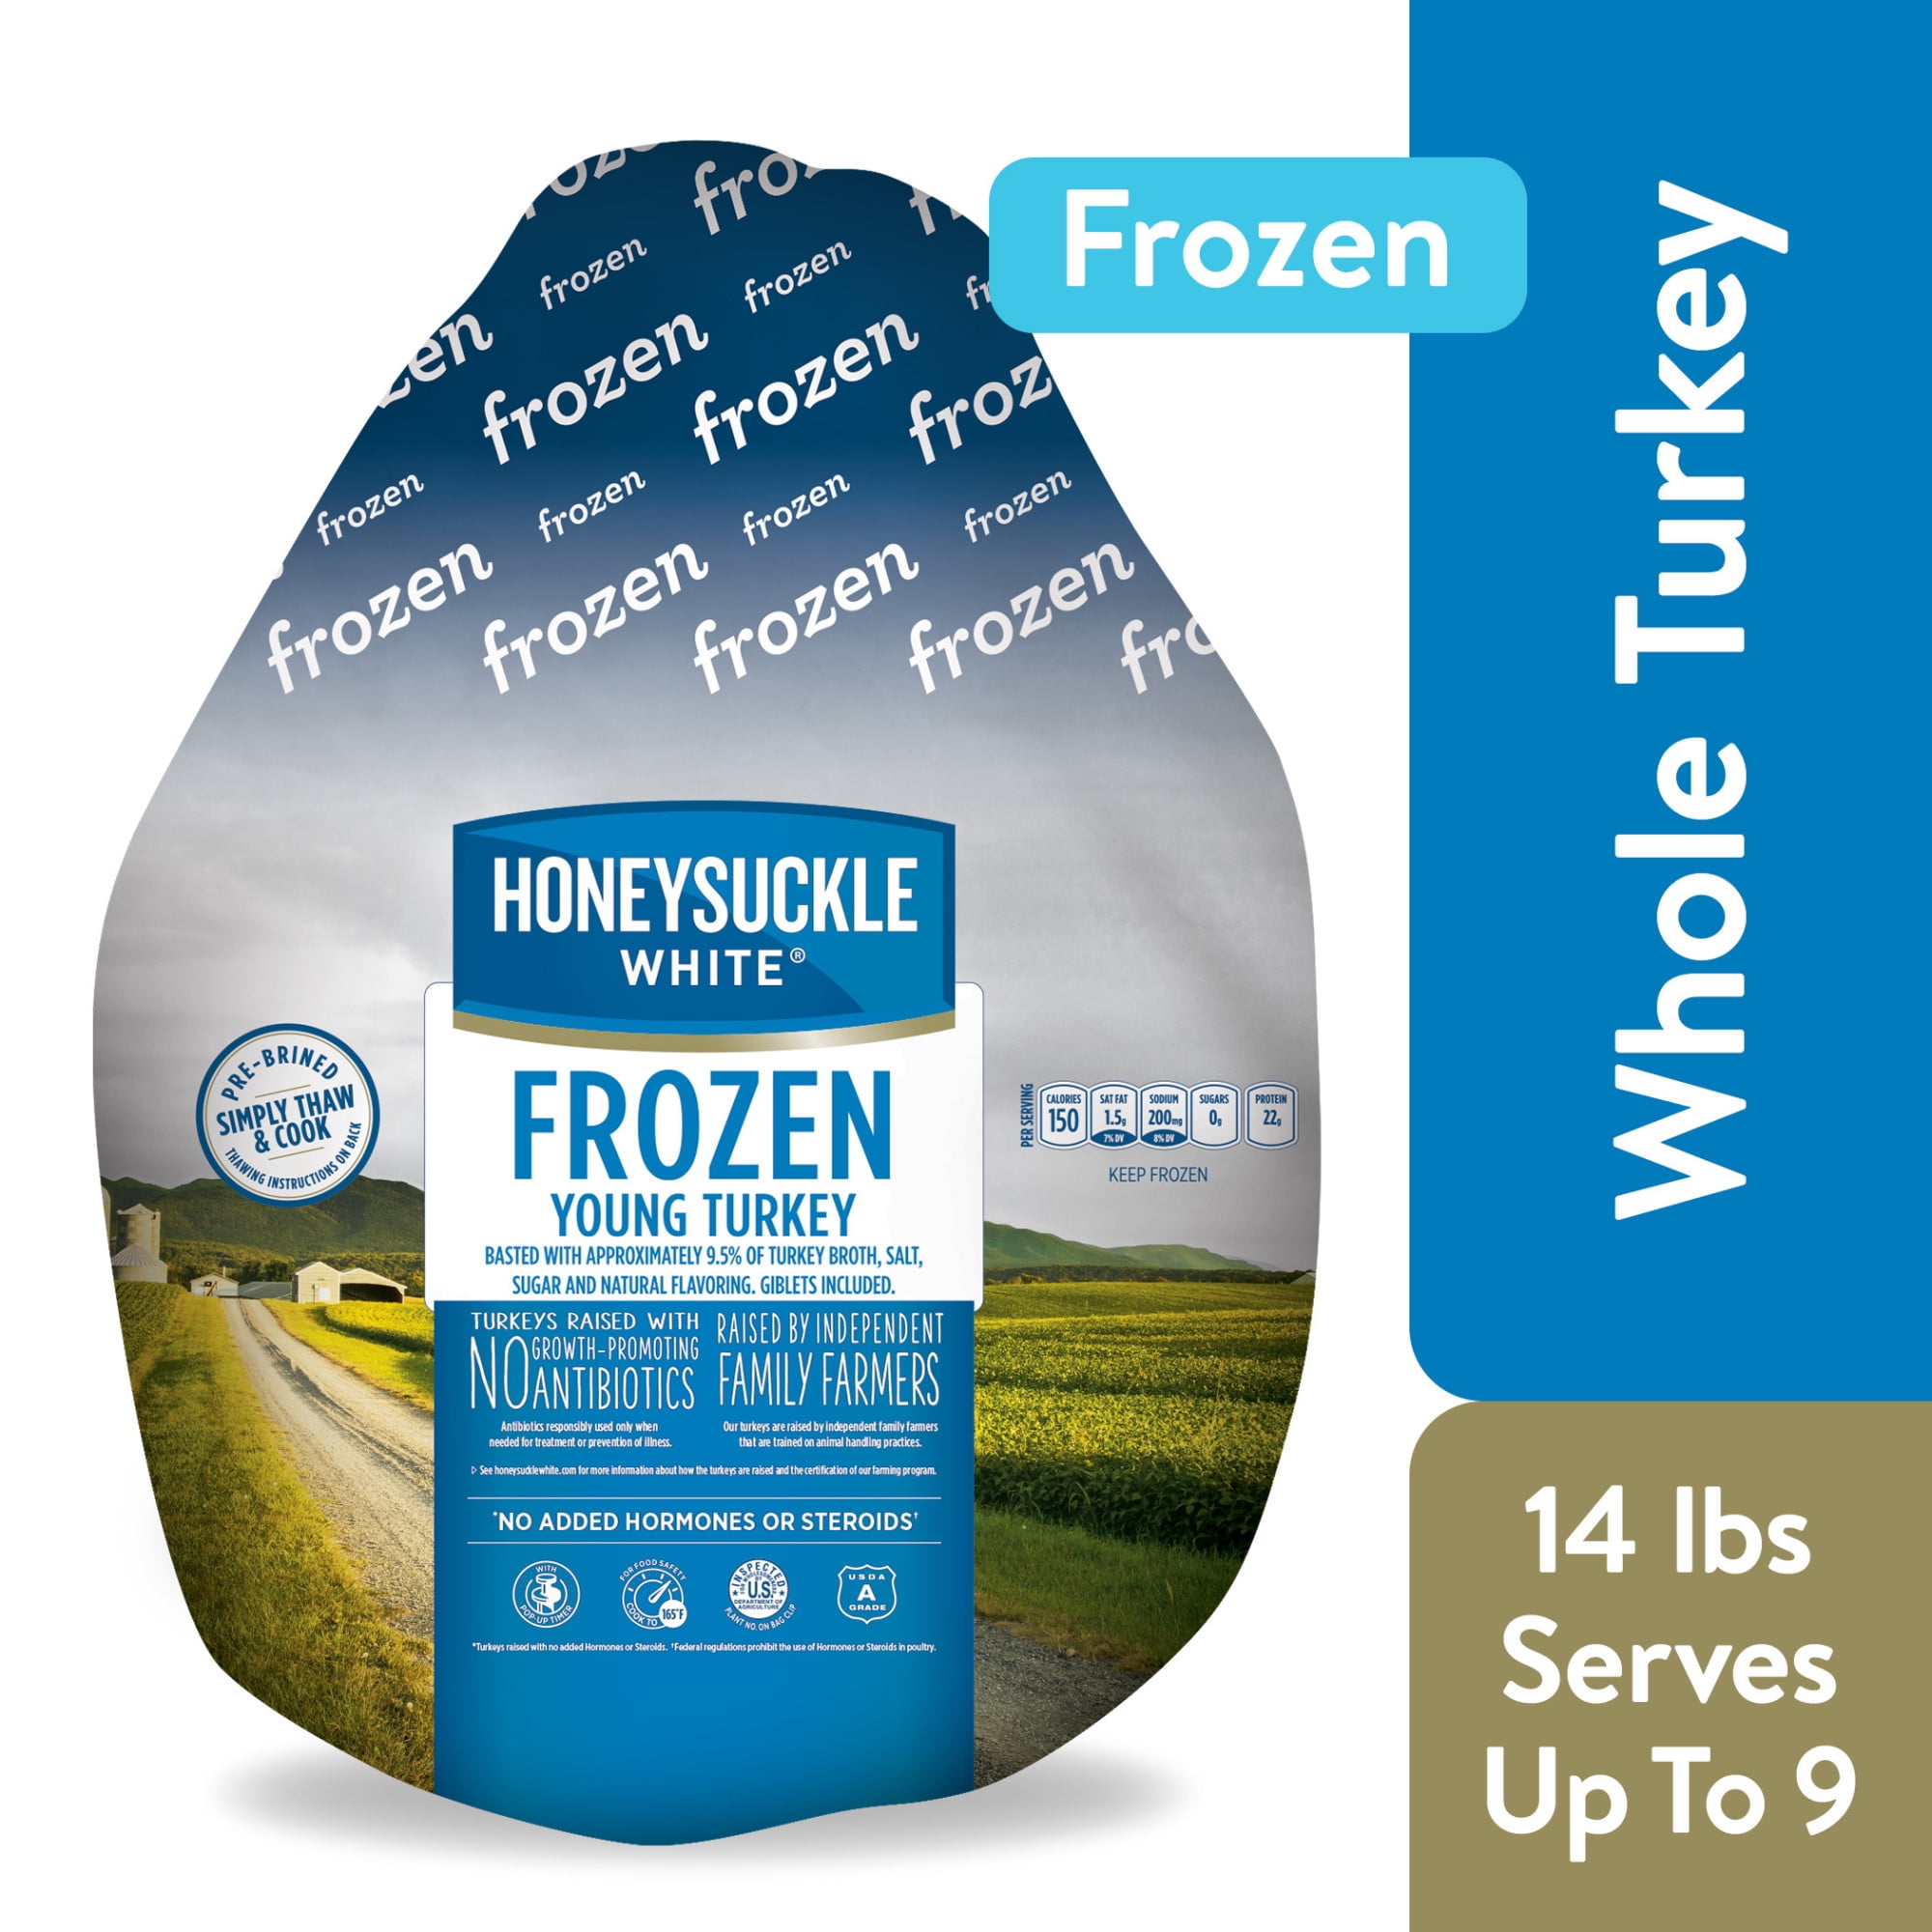 Honeysuckle White Whole Turkey, 14 lbs. (Frozen), Serves up to 9